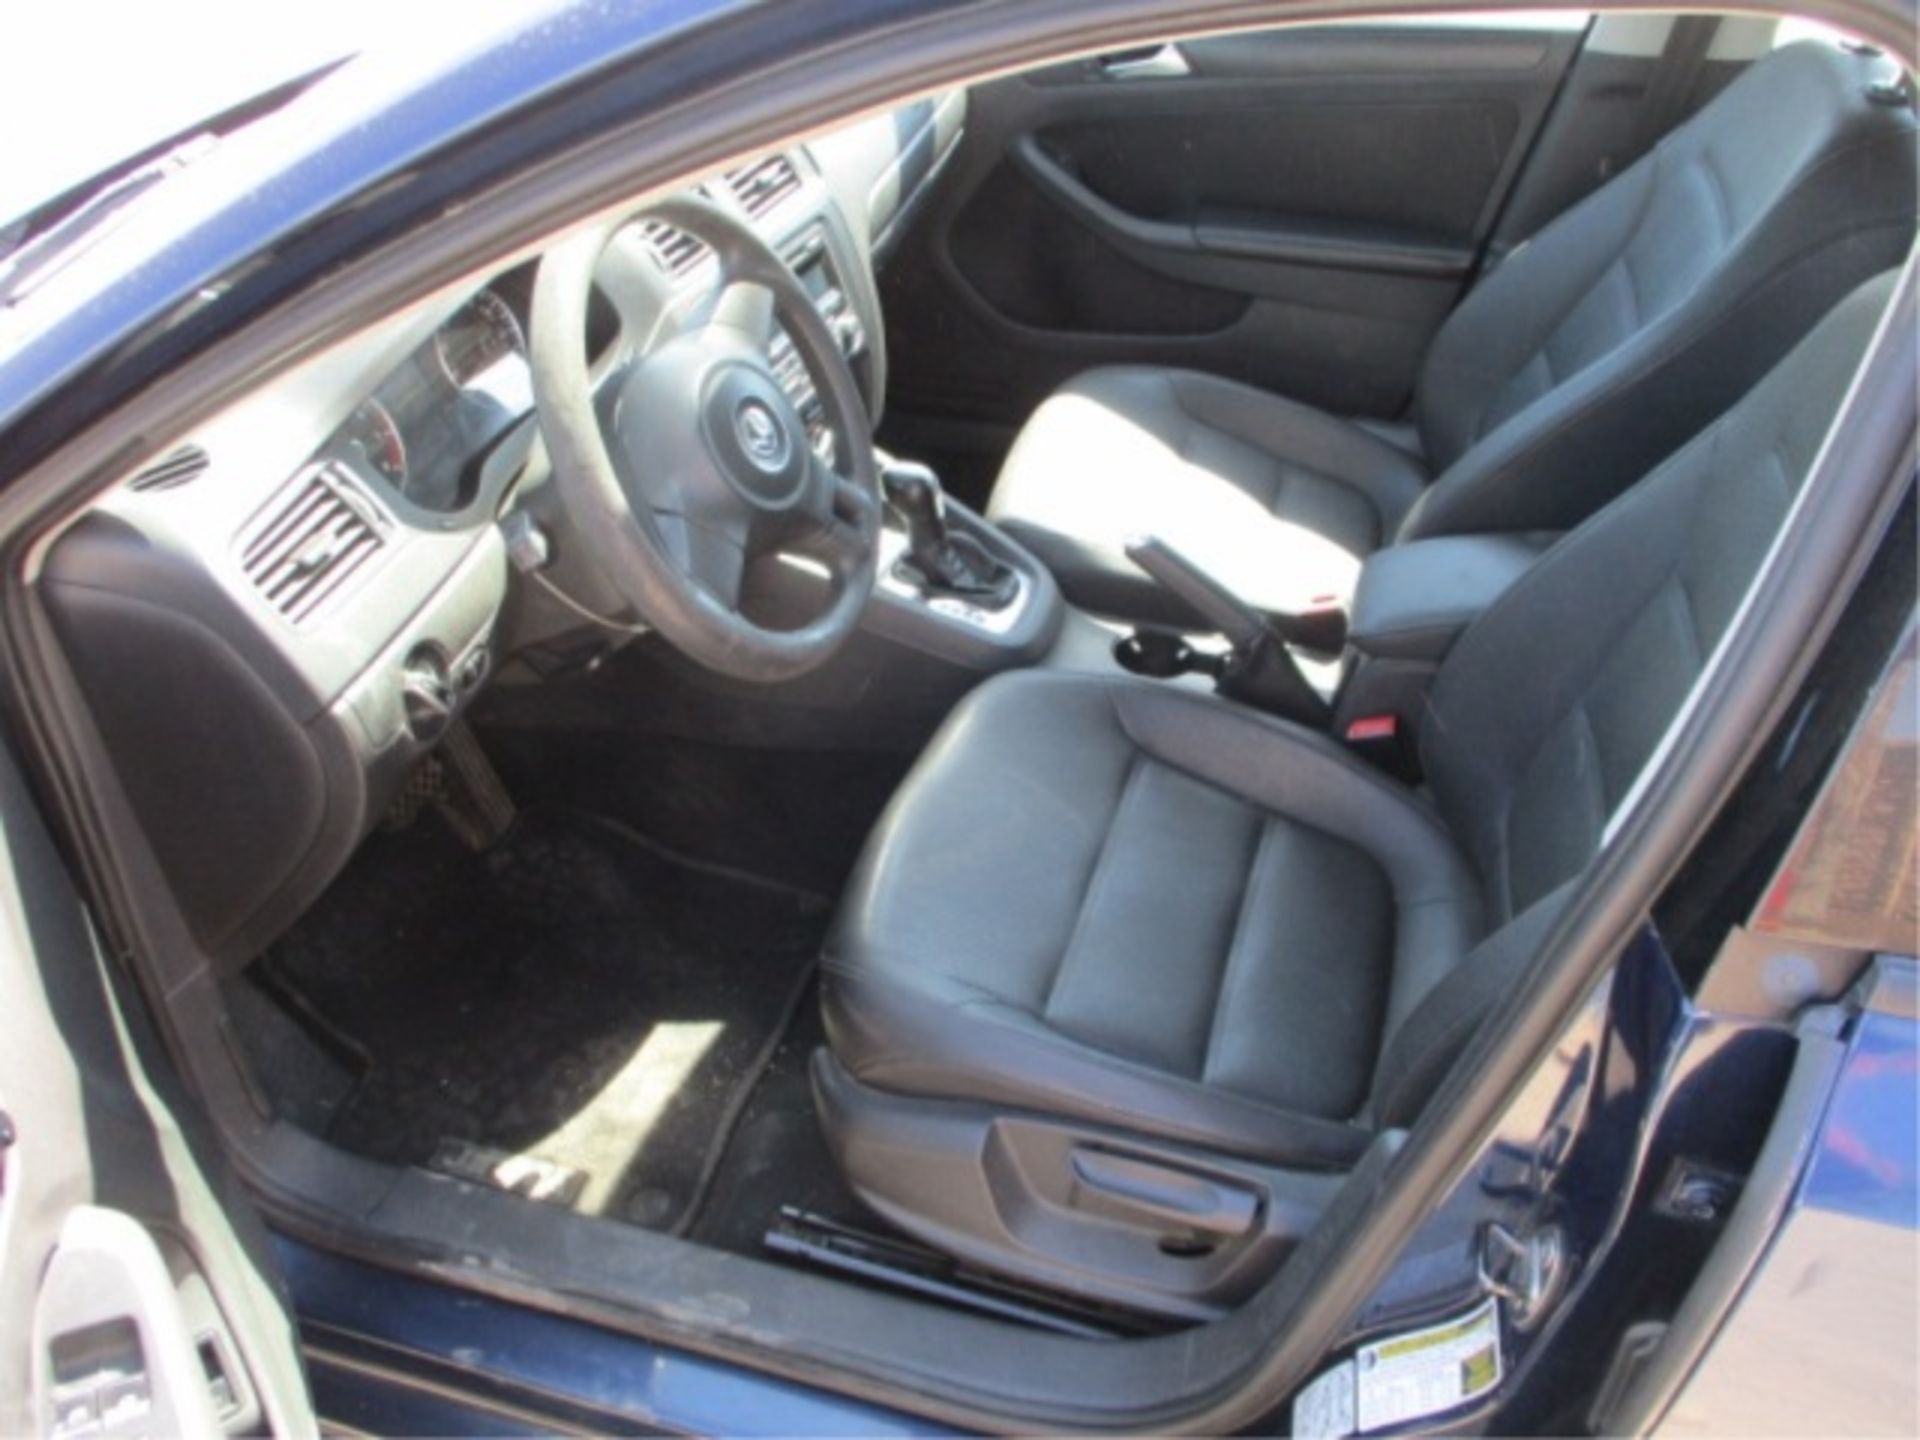 2012 Volkswagen Jetta Sedan, 2.5L Gas, Automatic, S/N: 3VWDP7AJ6CM345626, Mile/Hours - 82277 - Image 19 of 40